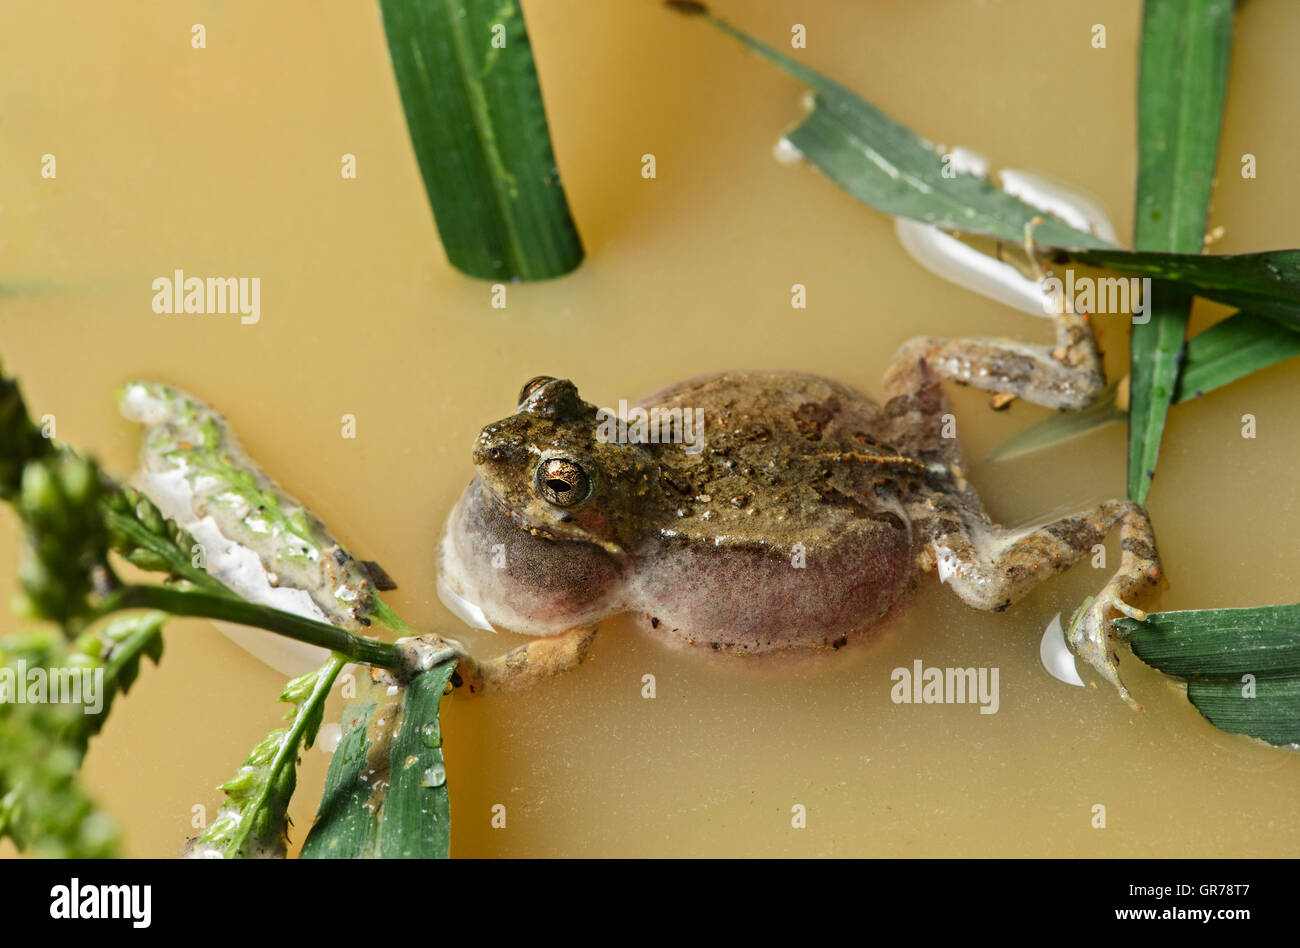 Male Of The Tungara Frog Engystomops Pustulosus With Vocal Sac, Jorupe Naturreserve, Ecuador Stock Photo